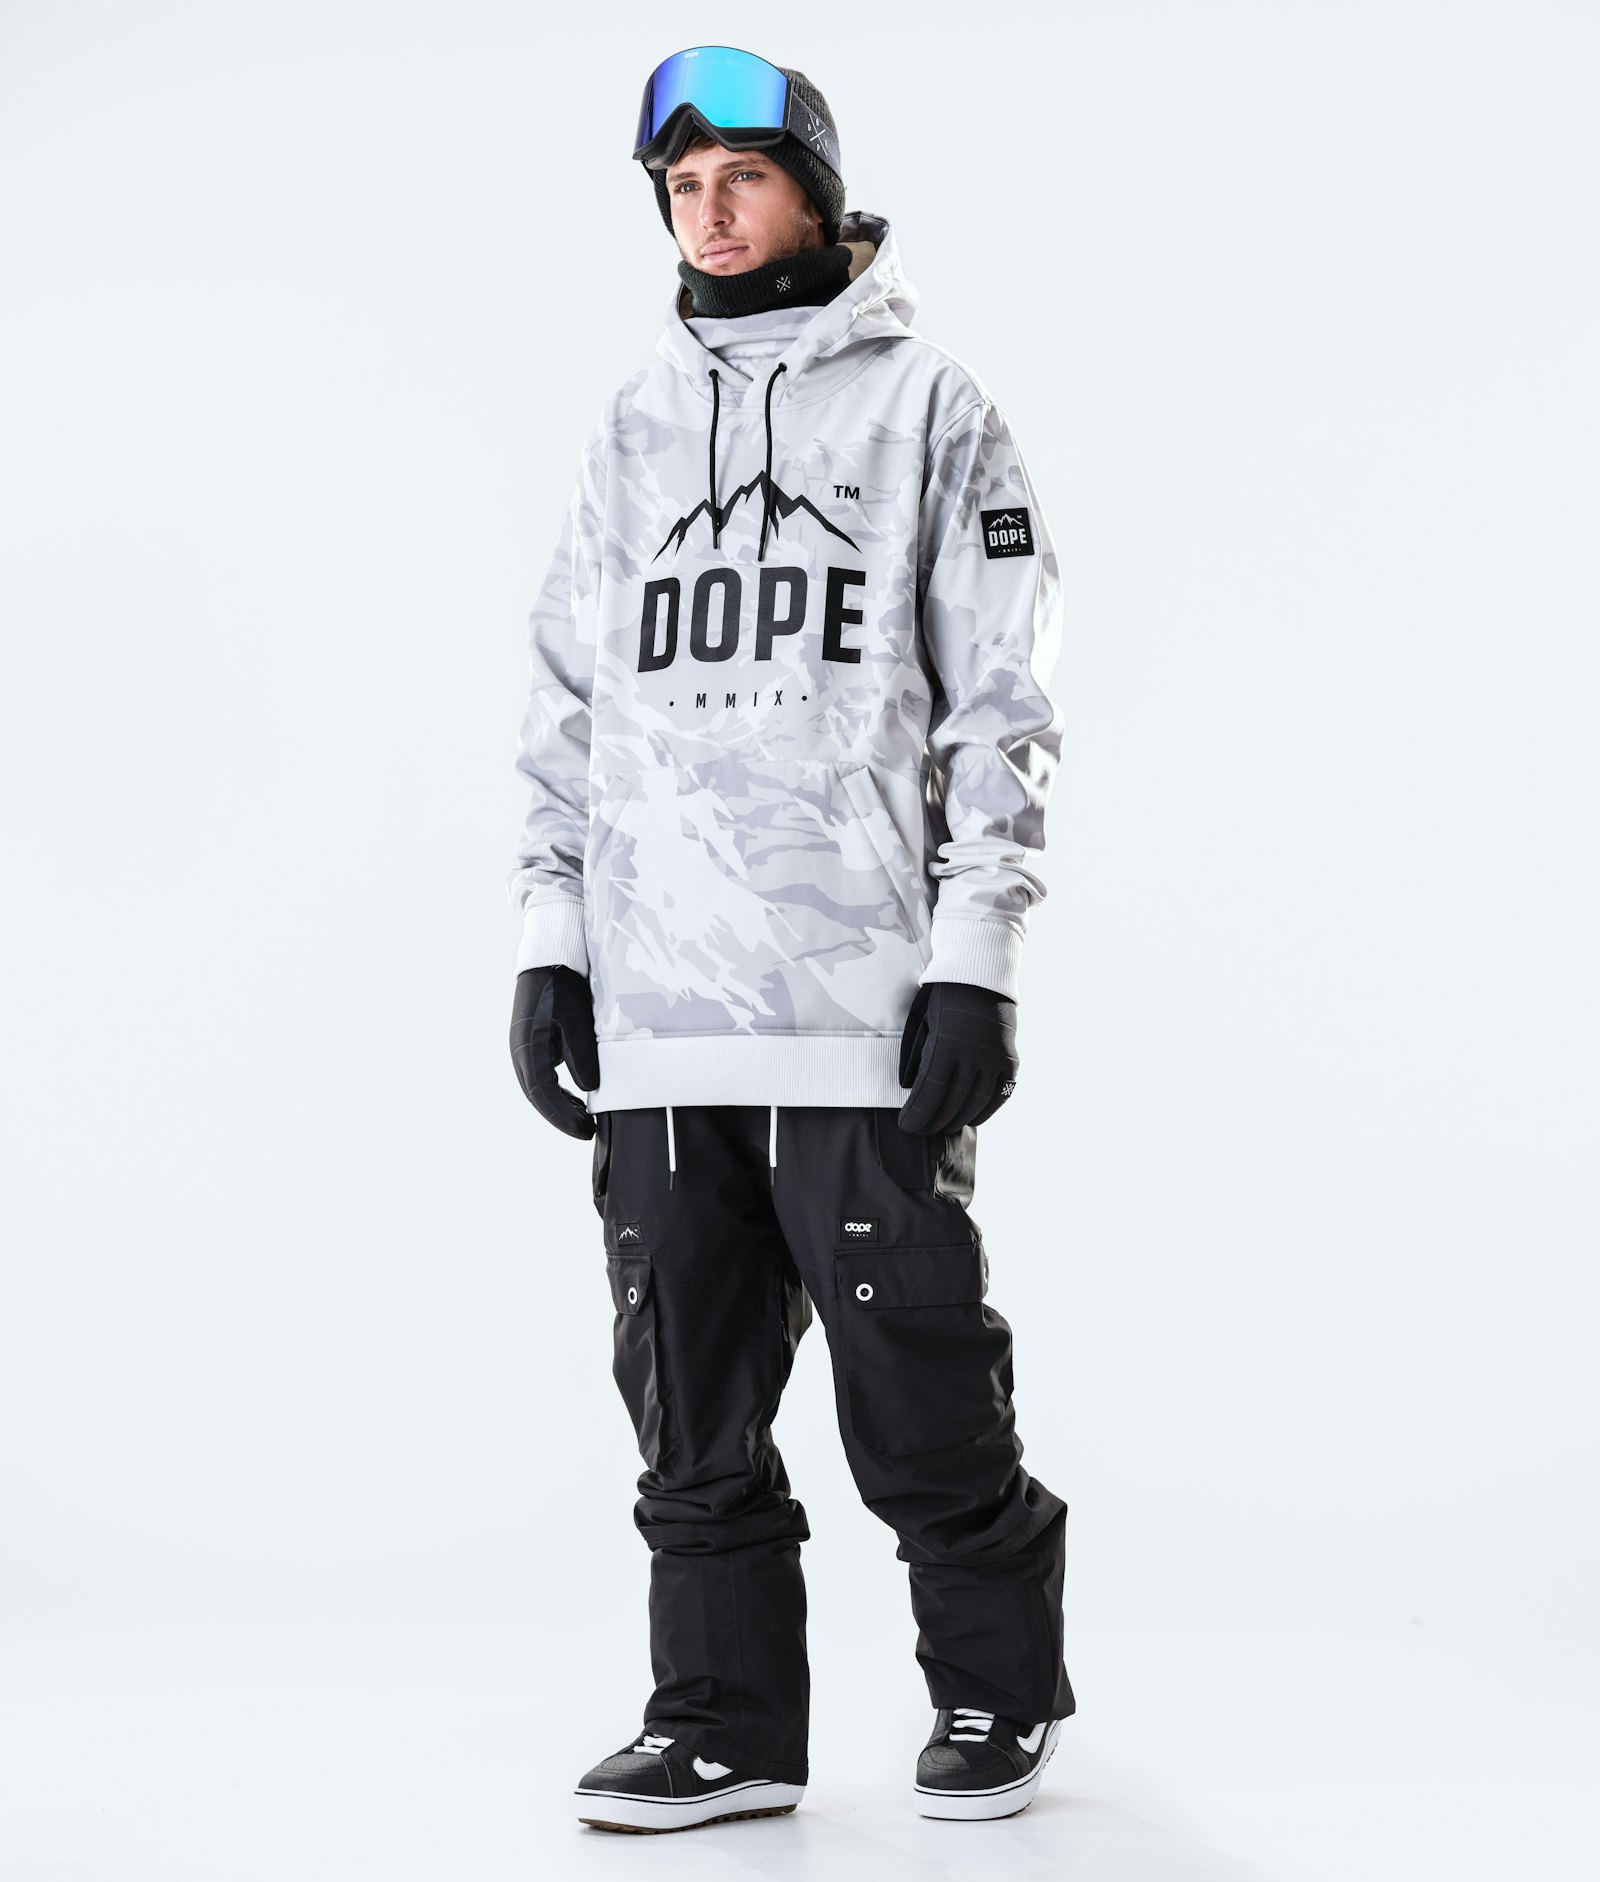 Dope Yeti 10k Veste de Ski Homme Paradise Tucks Camo, Image 7 sur 9